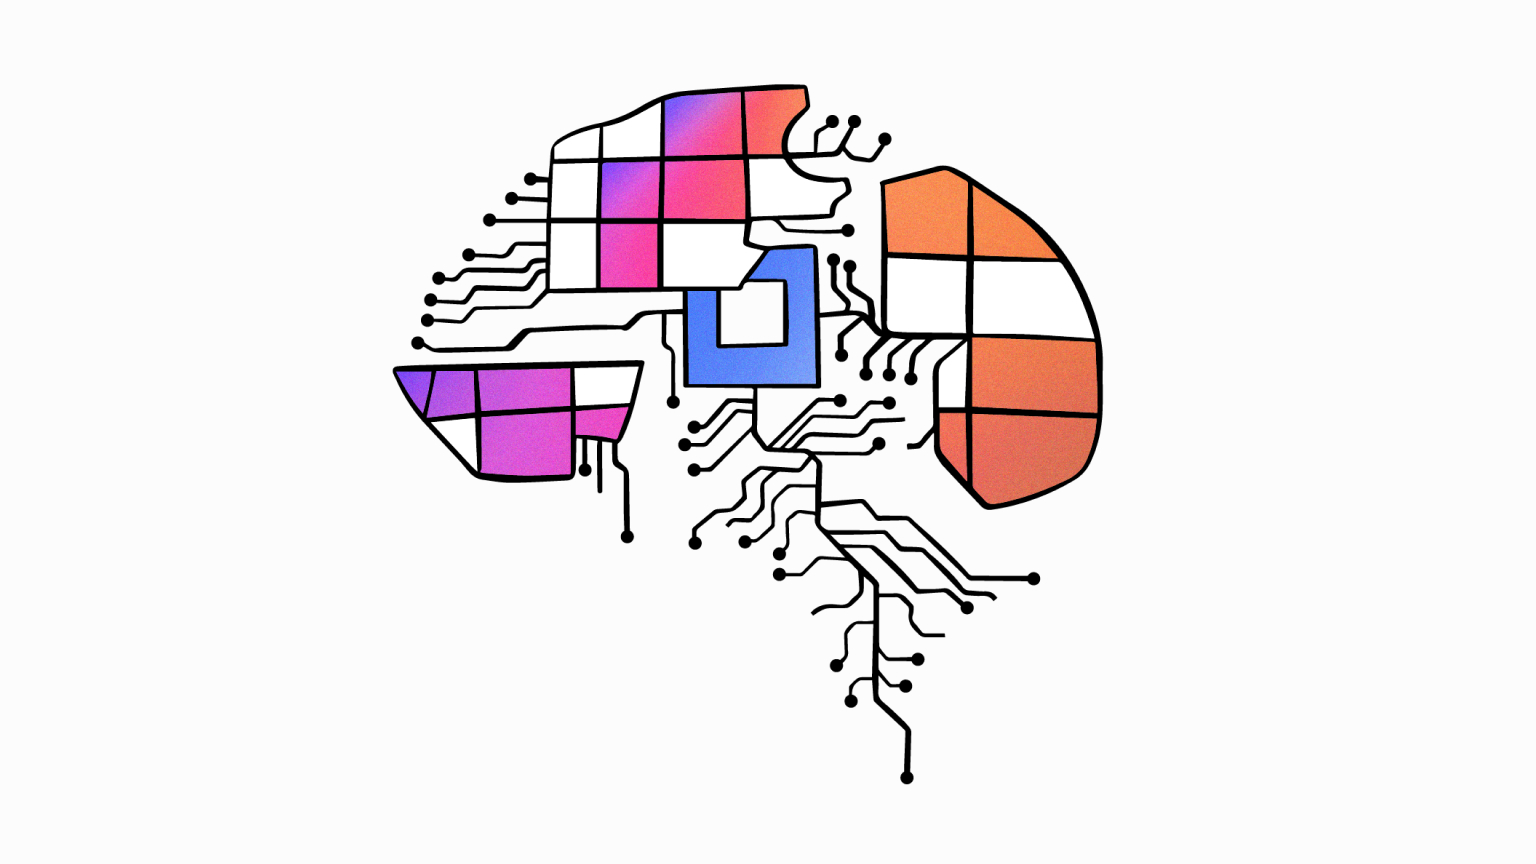 Brain illustration symbolizing few-shot learning as part of self-learning algorithms